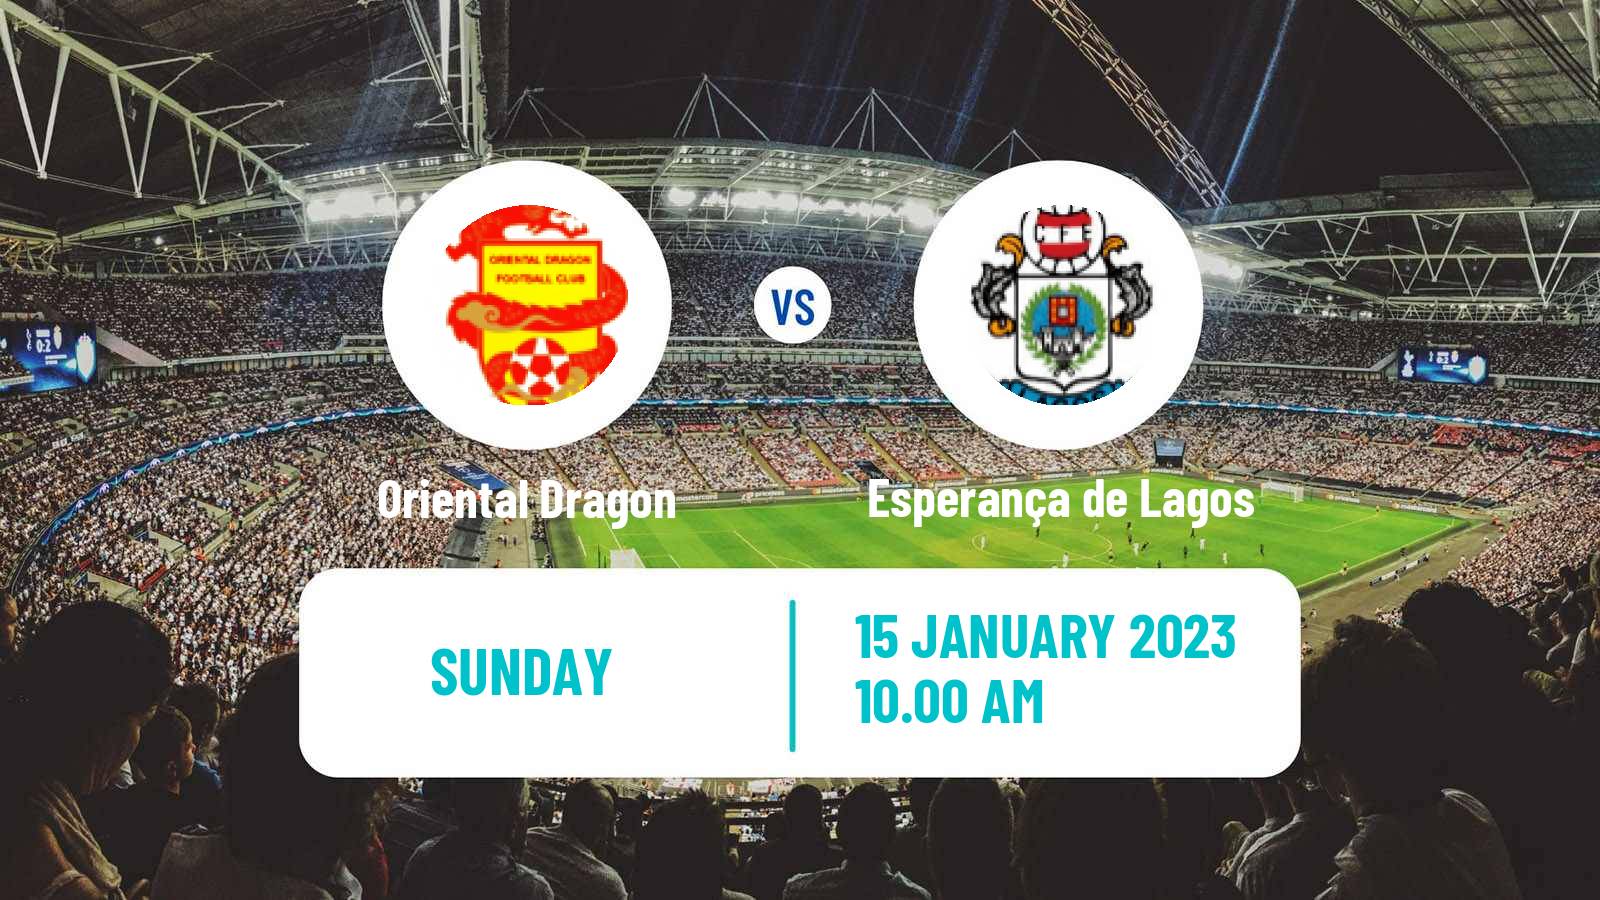 Soccer Campeonato de Portugal Oriental Dragon - Esperança de Lagos